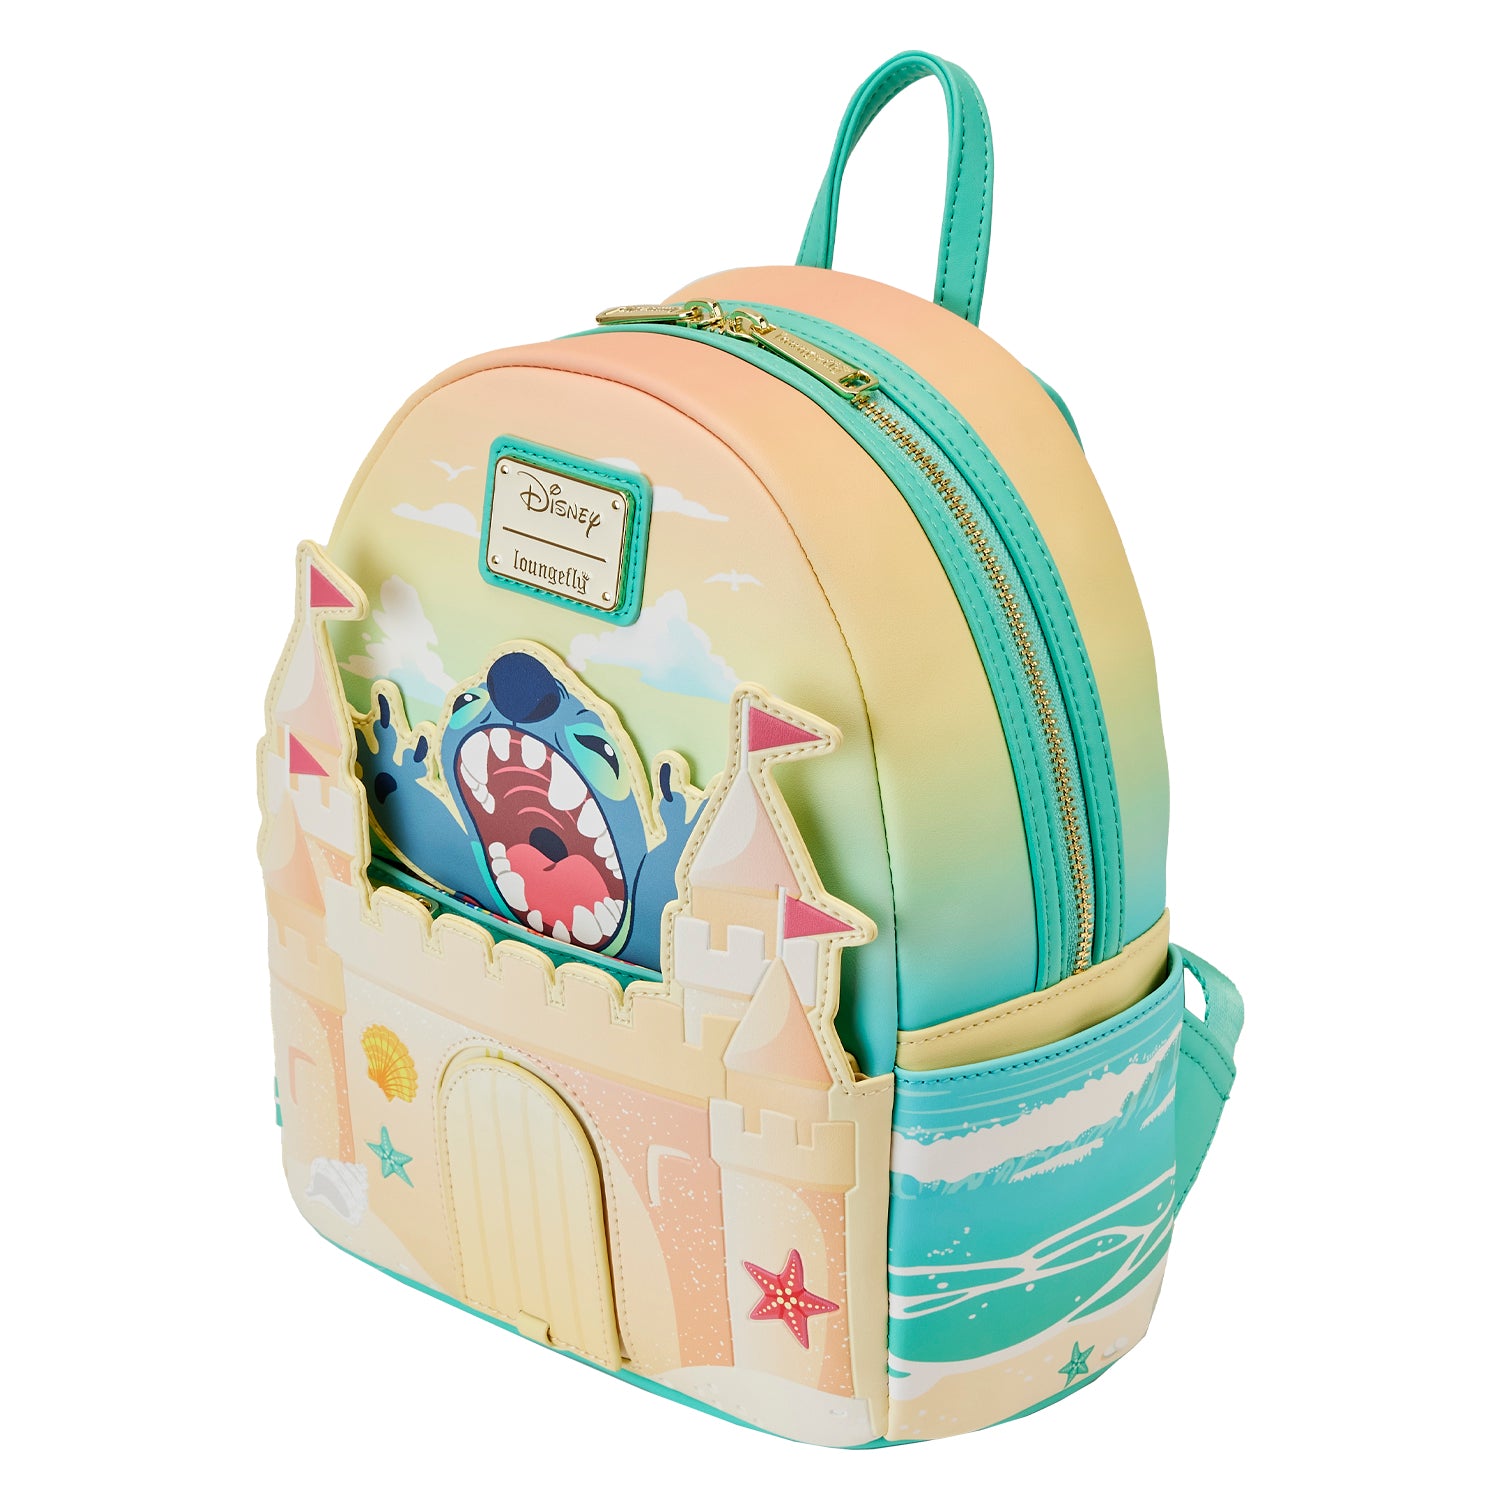 Disney Loungefly mini backpack